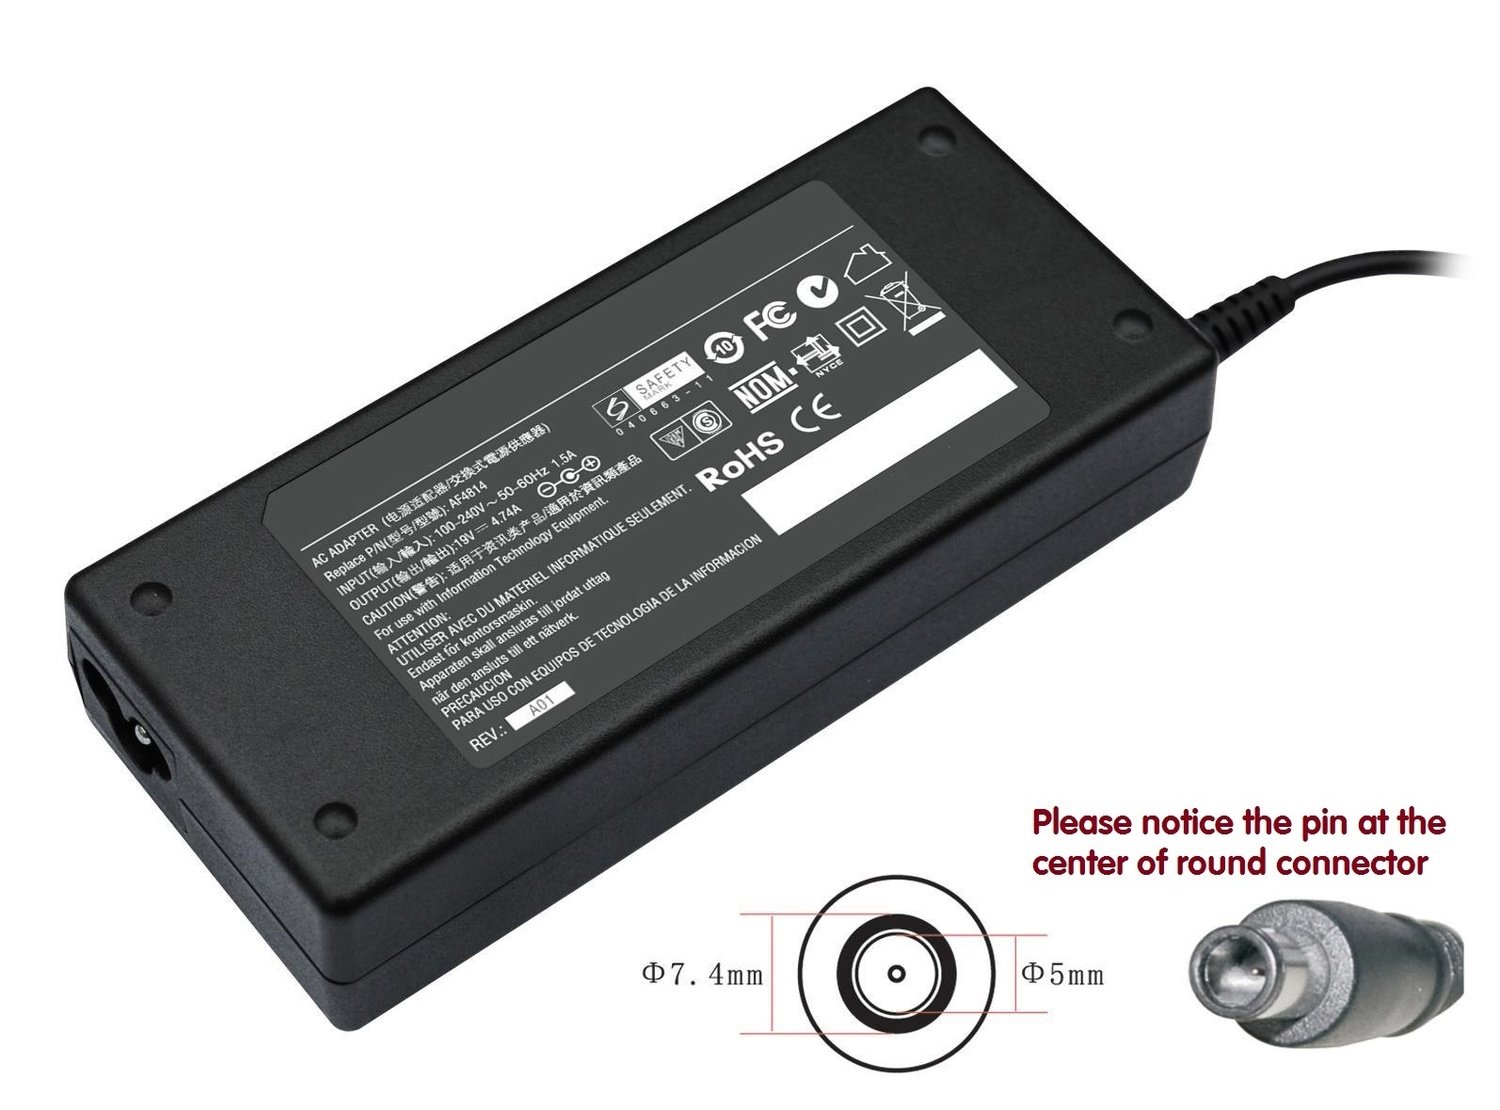 Dell Latitude E4300 E4400 E5400 E5500 E6300 E6400 E6500 Series Compatible laptop charger / ac power adaptor